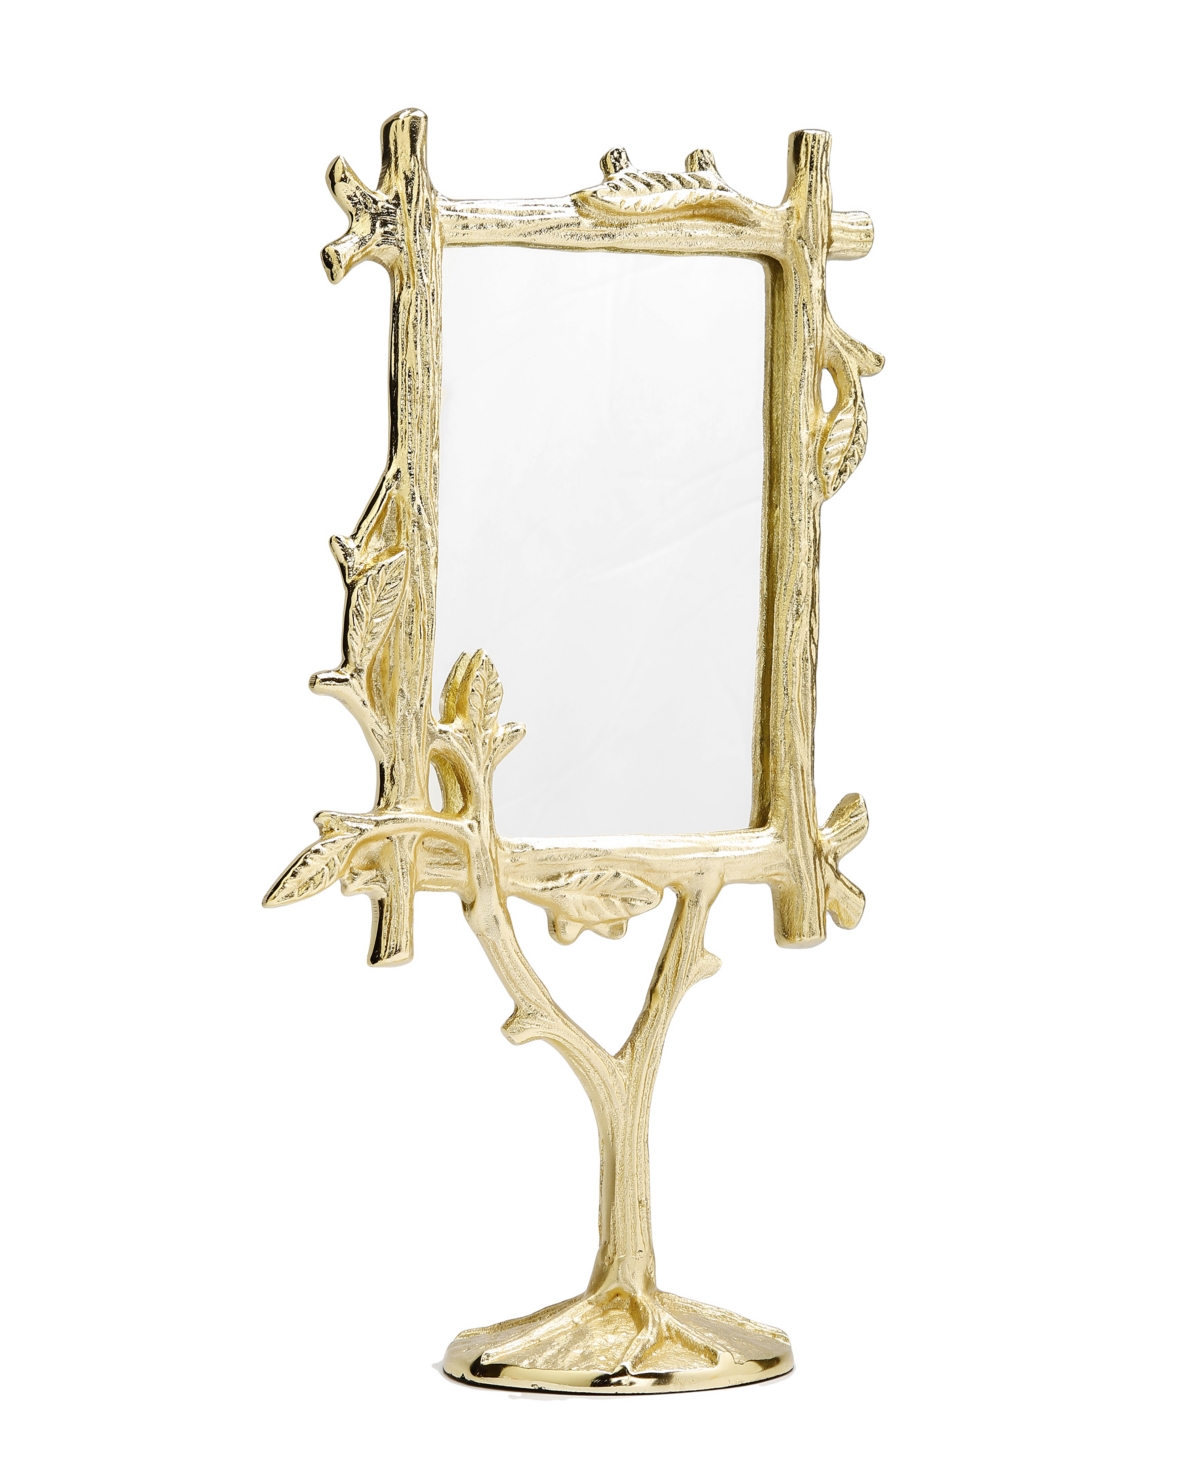 Branch Design Table Mirror - Gold-Tone